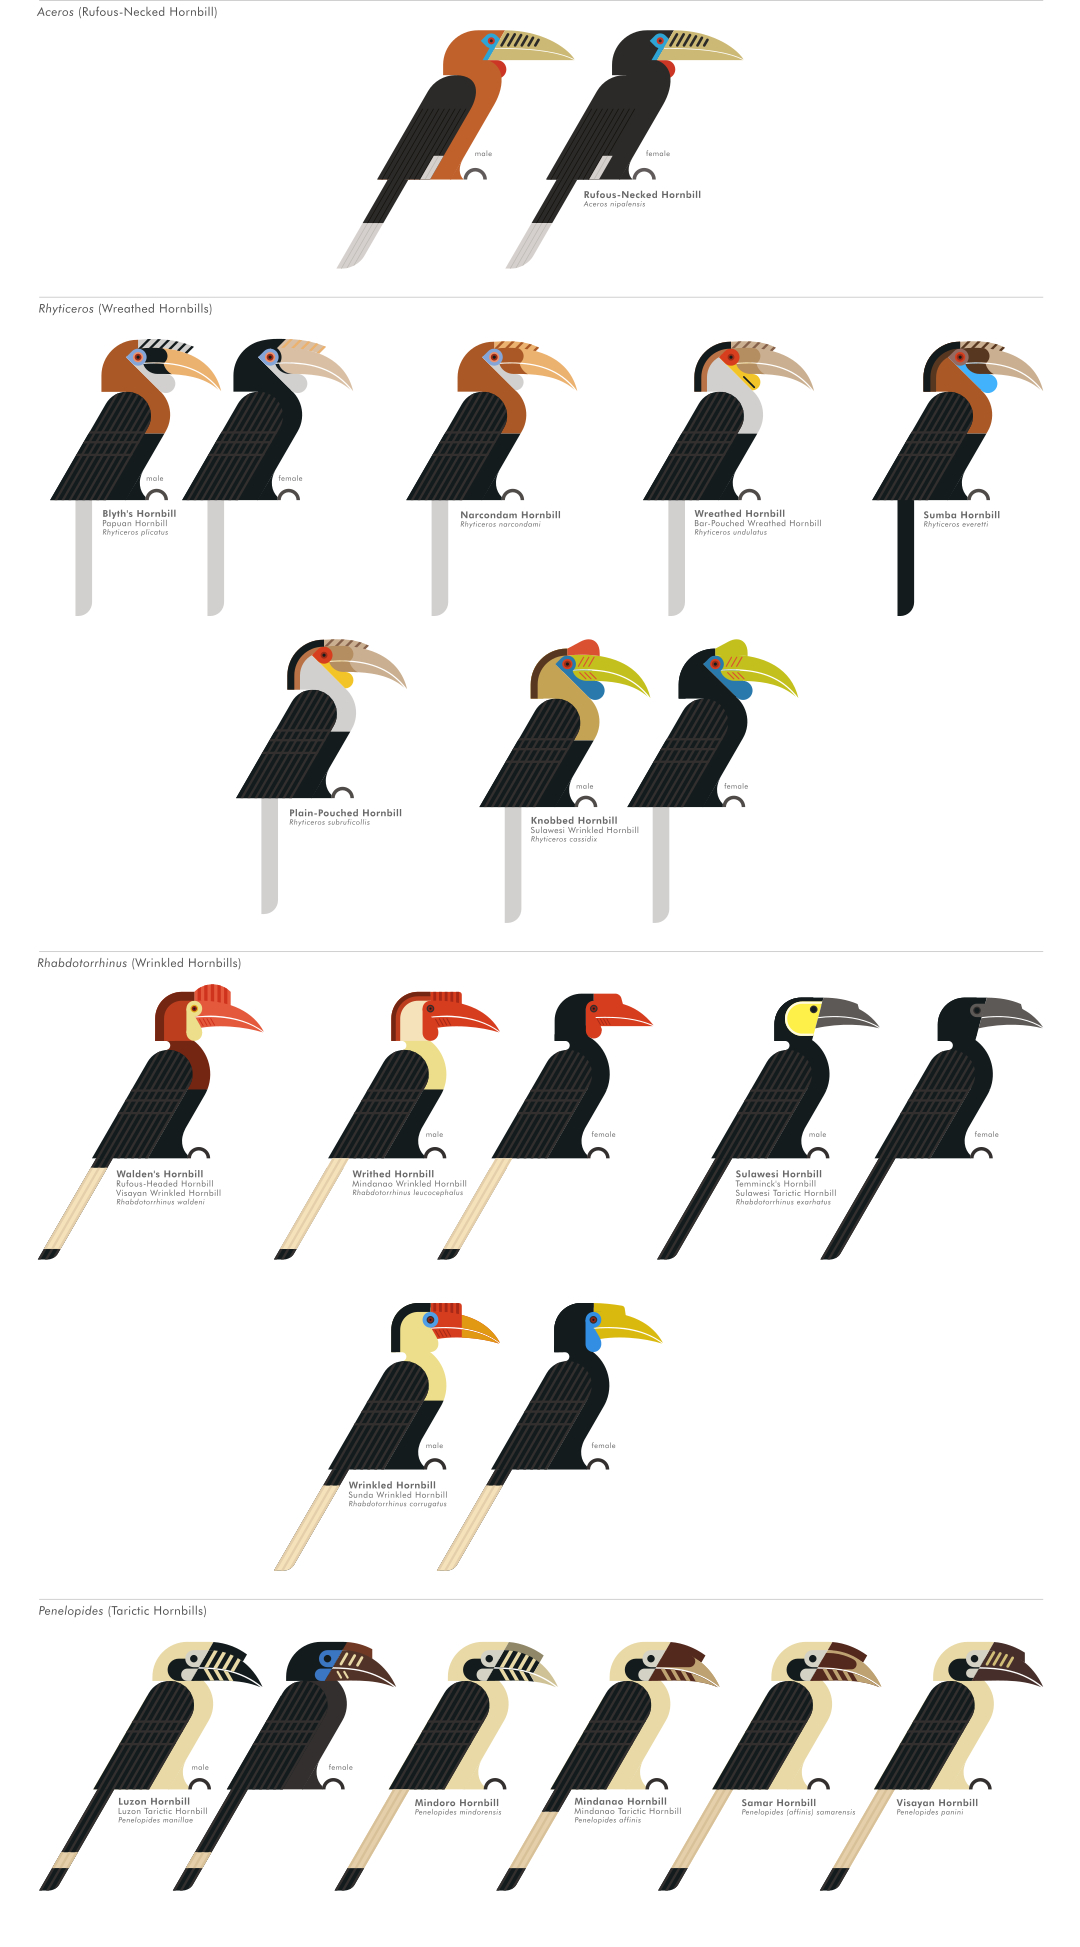 scott partridge - ave - avian vector encyclopedia - hornbills bucerotiformes